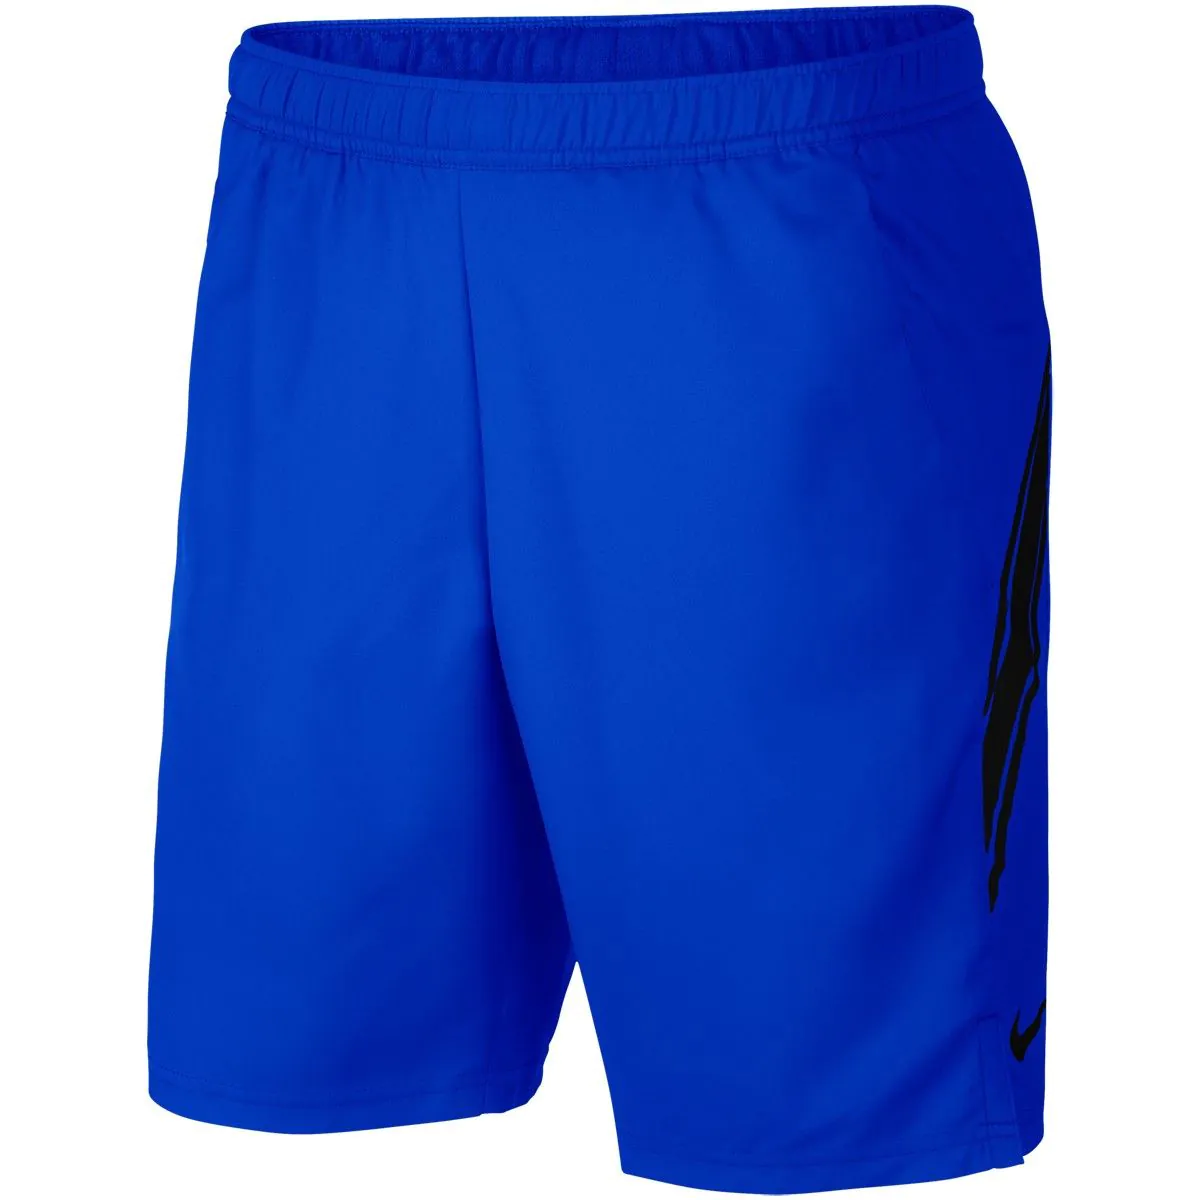 NikeCourt Dry 9-inch Men's Tennis Shorts 939265-480